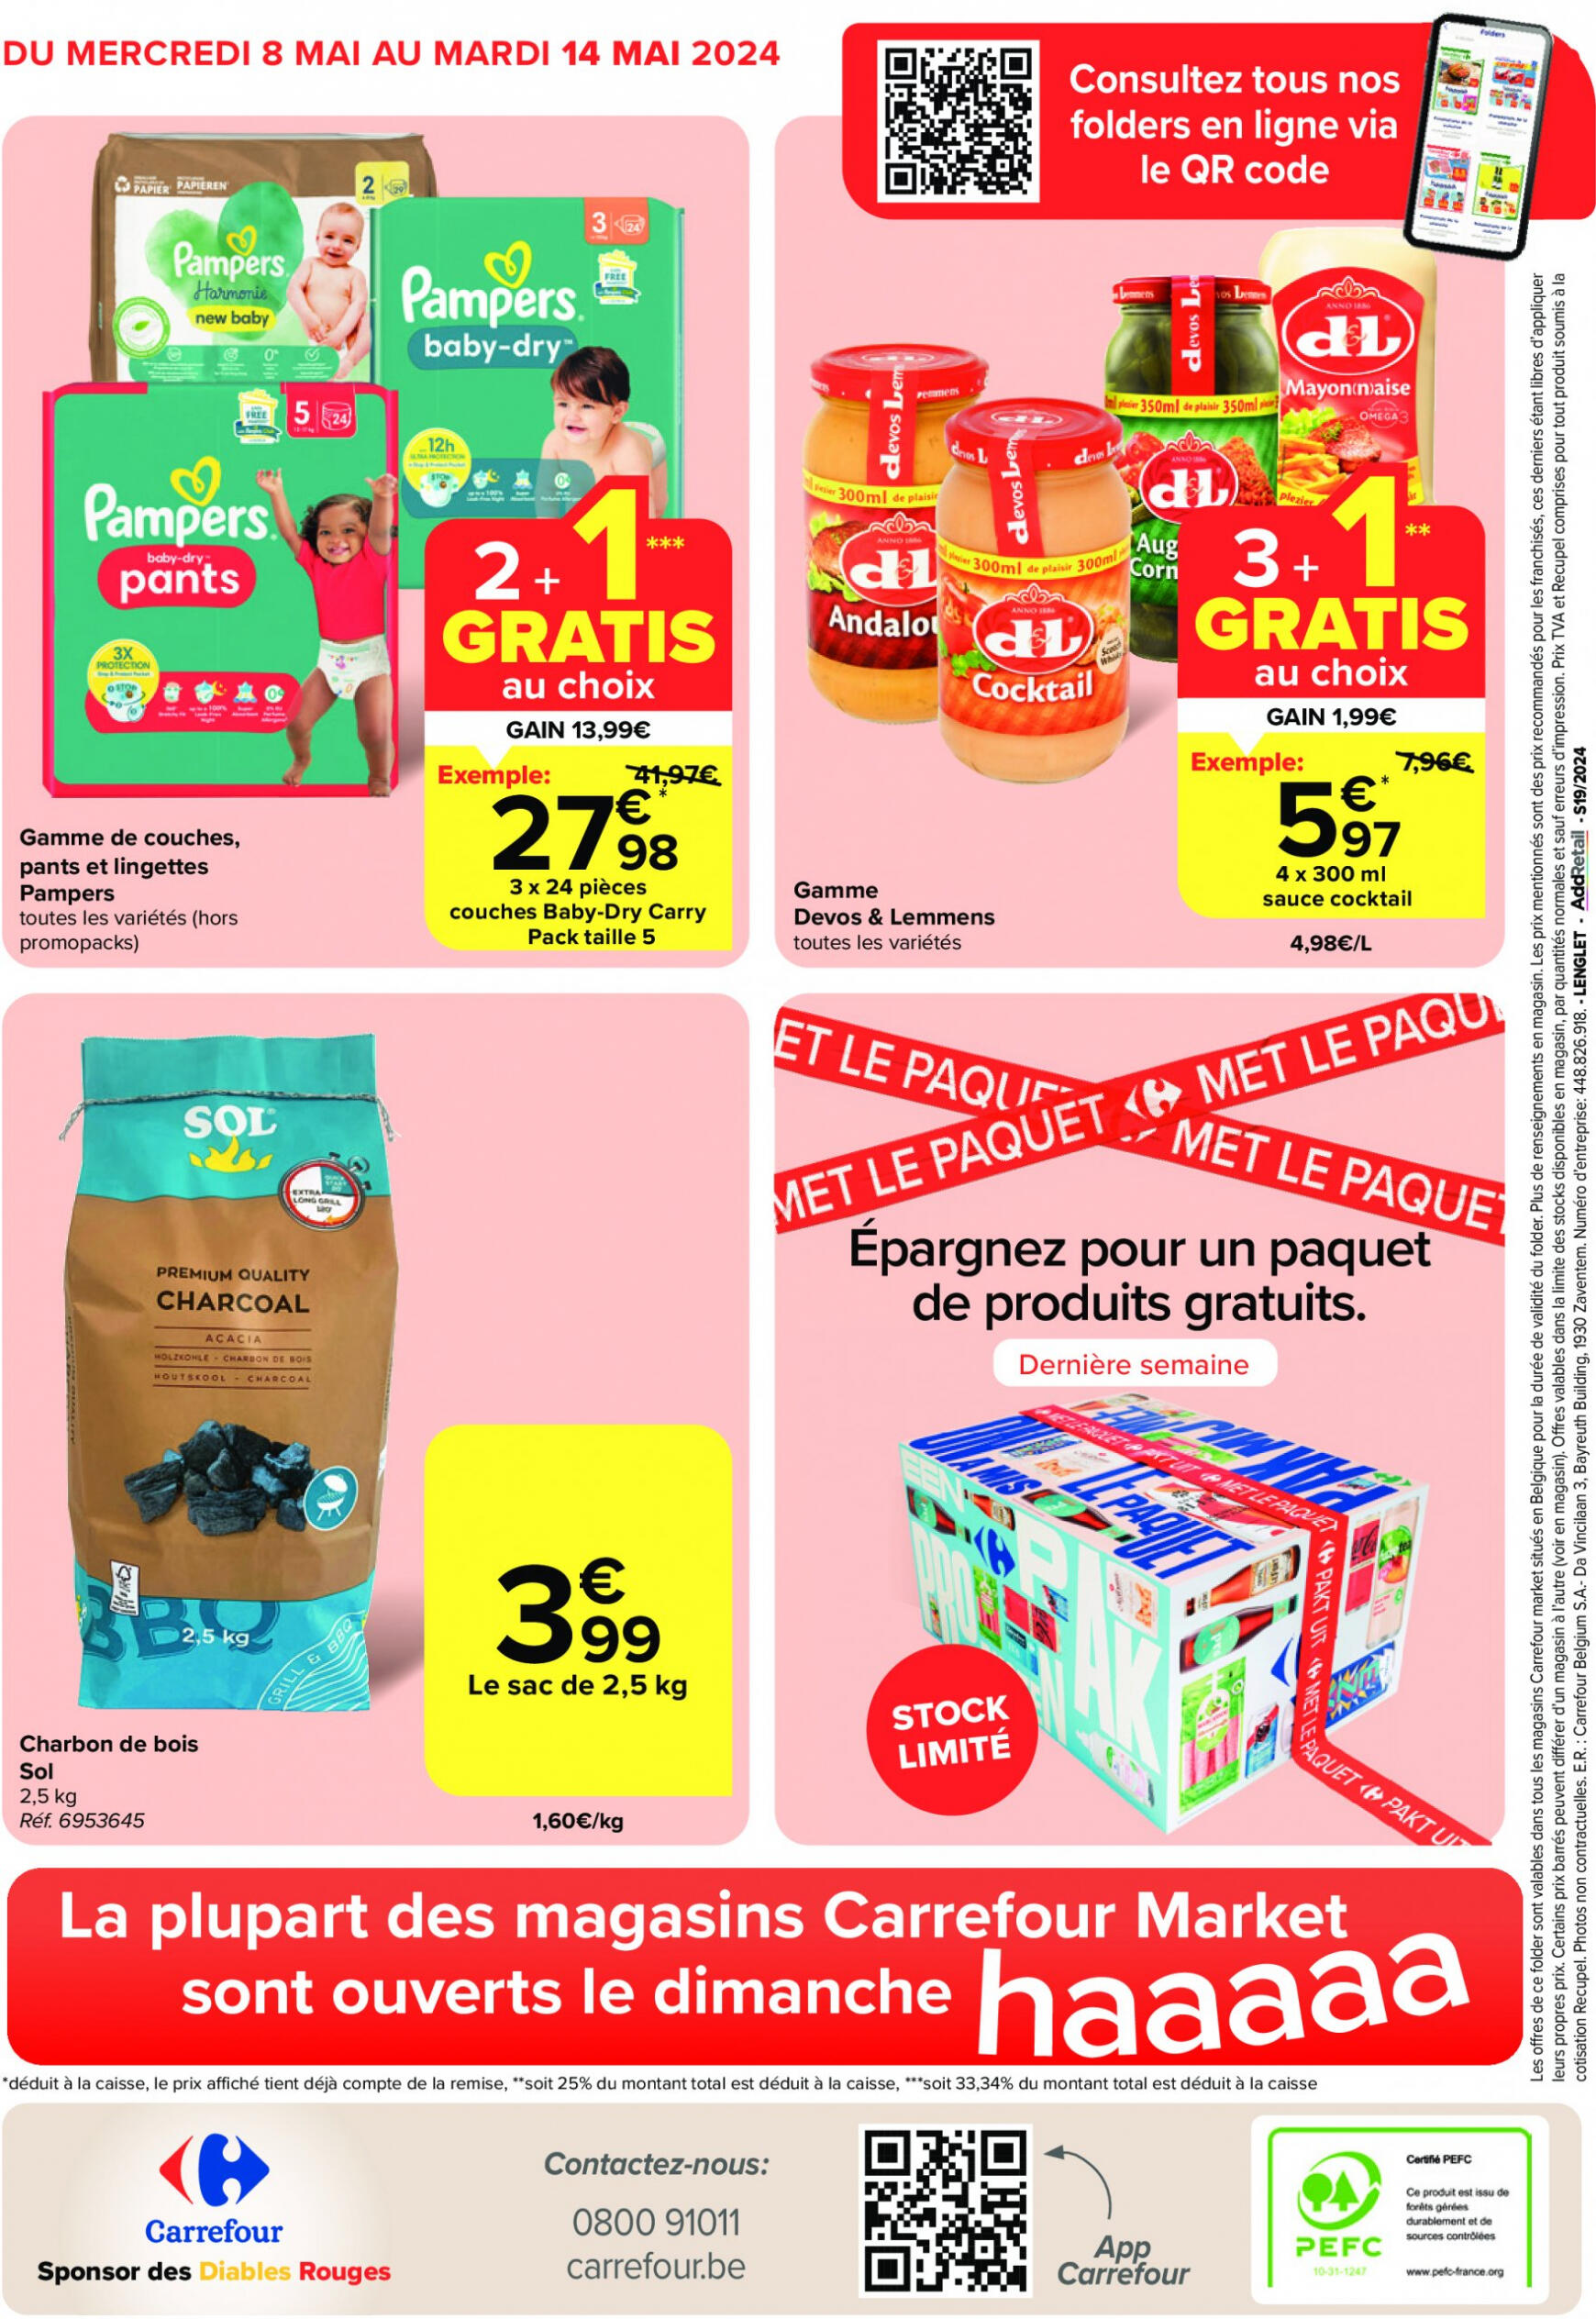 carrefour - Carrefour folder huidig 08.05. - 14.05. - page: 24